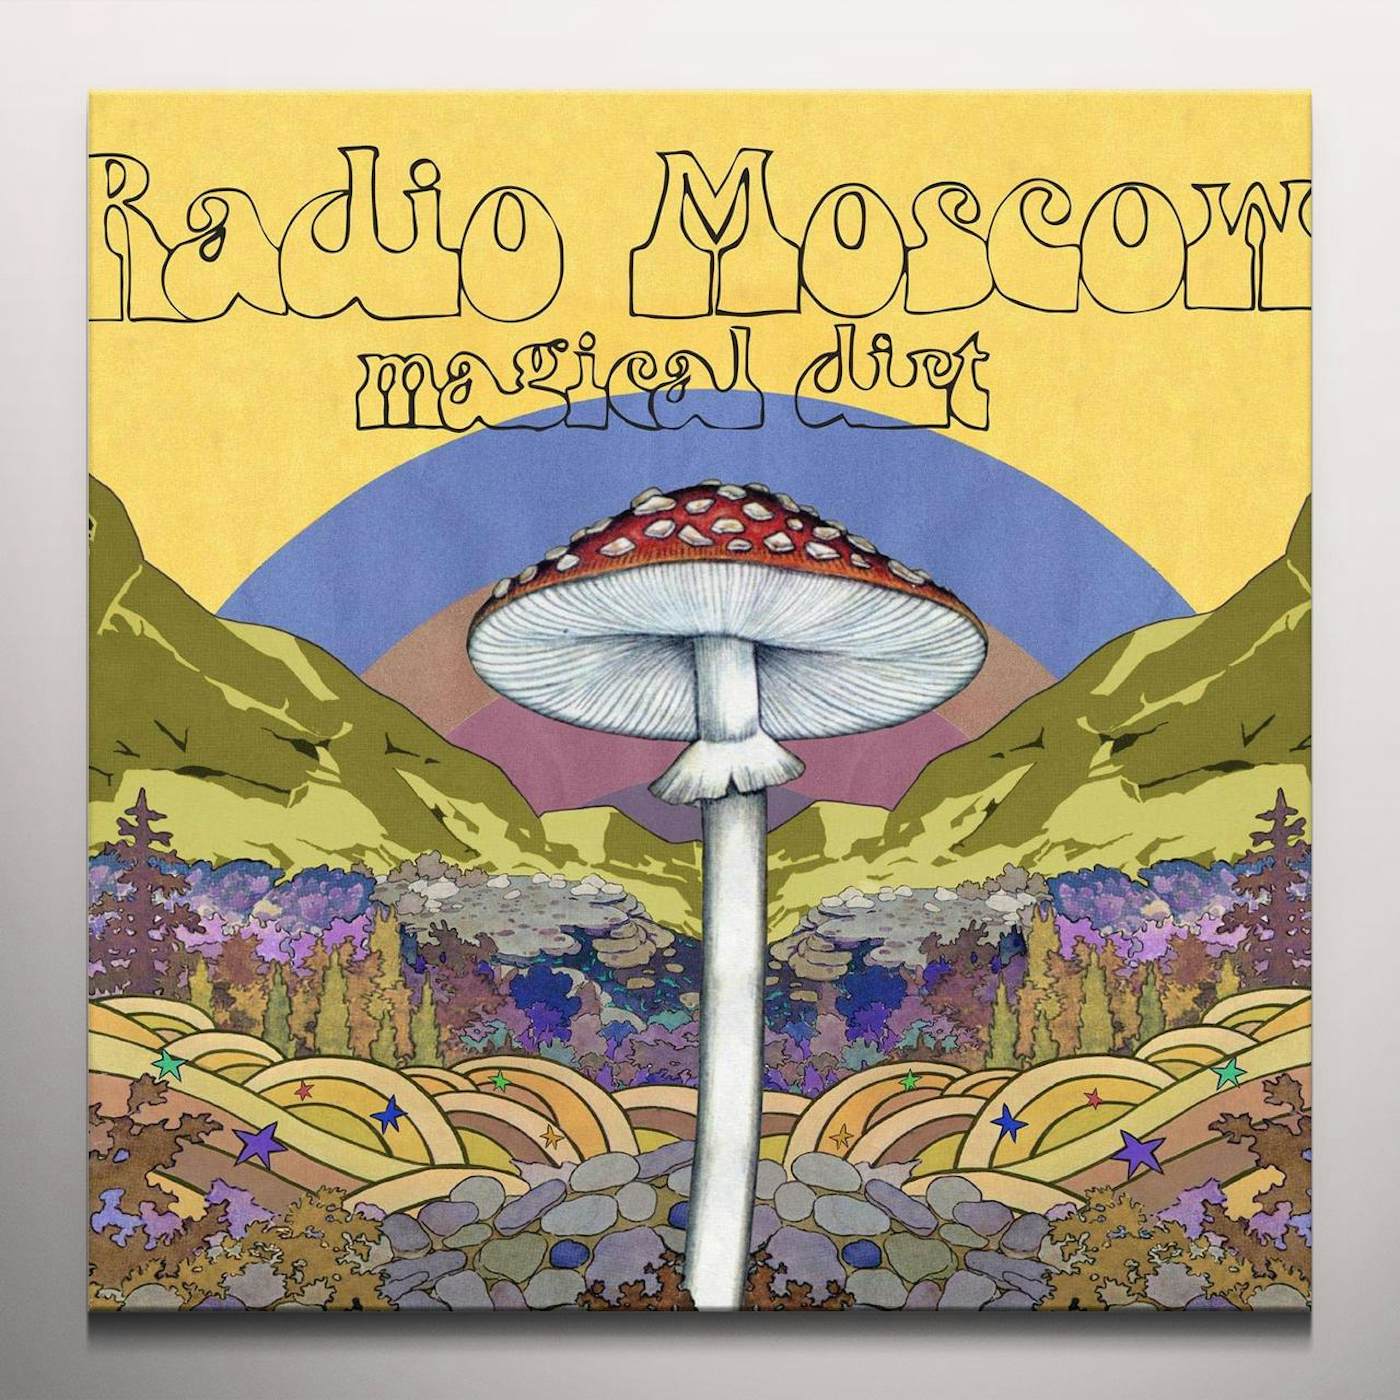 Radio Moscow Magical Dirt Vinyl Record